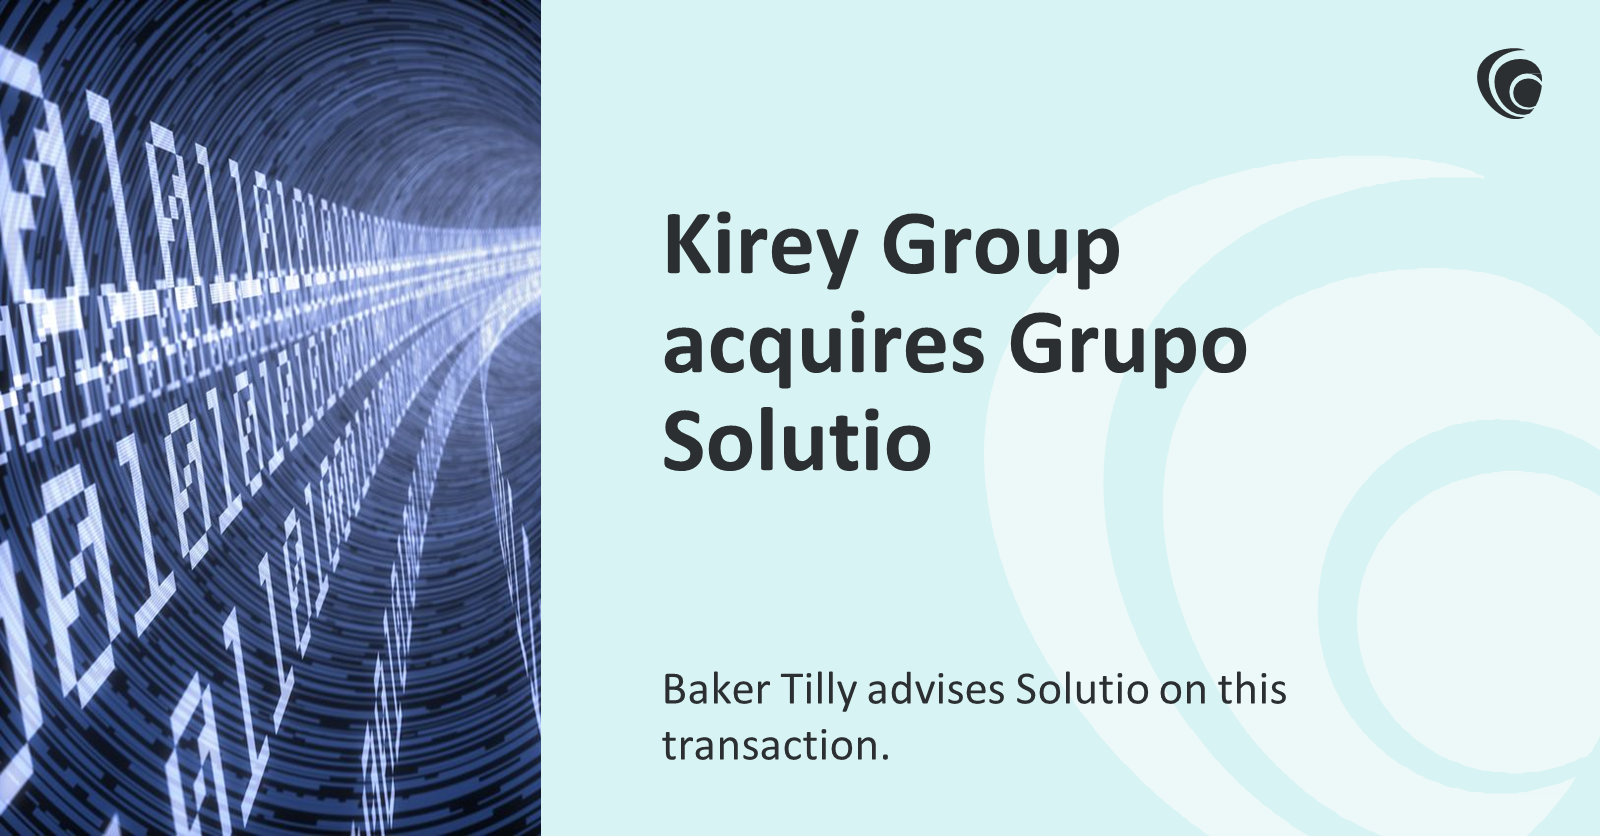 Solutio sold to Kirey